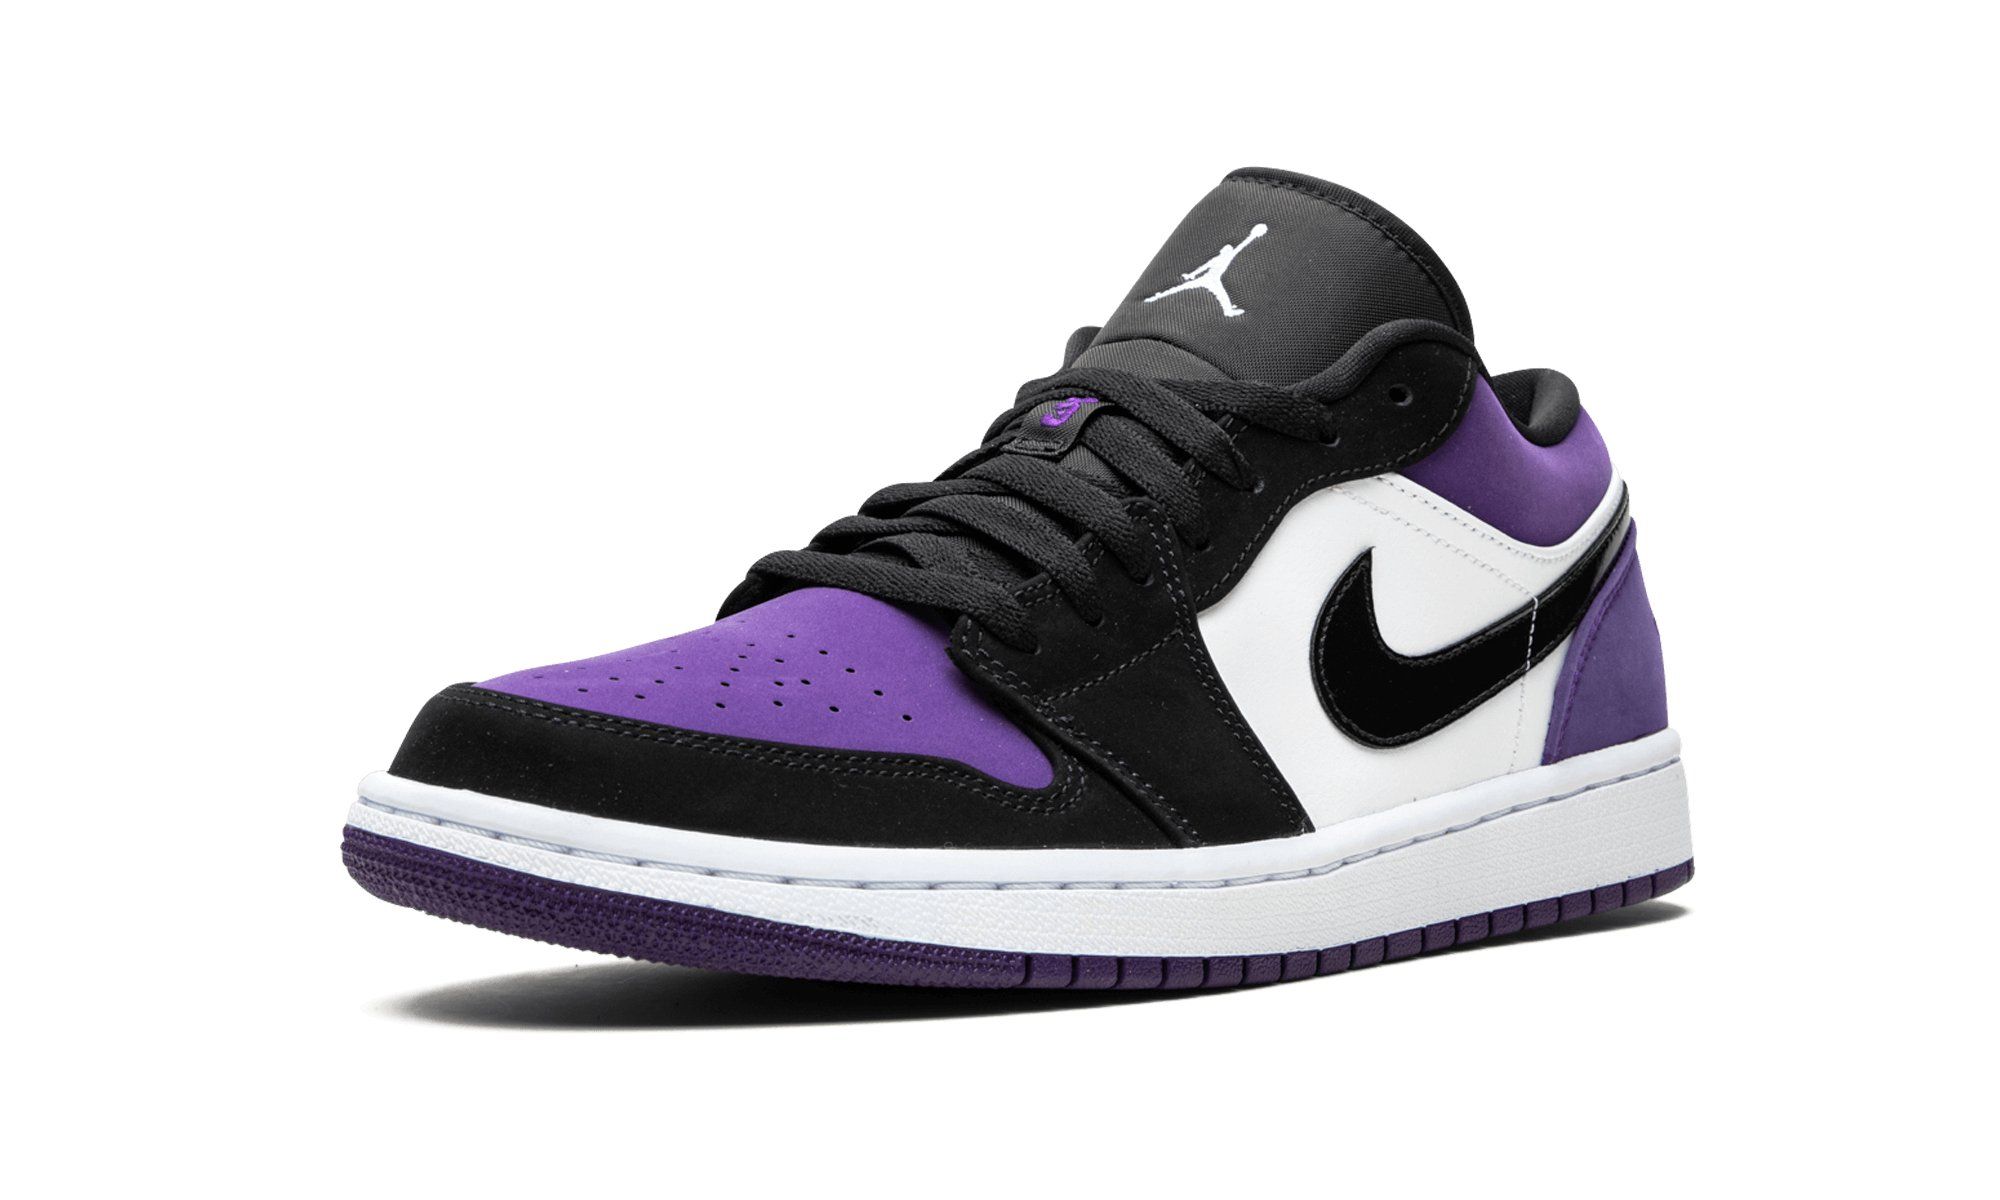 Низкие джорданы 1. Nike Air Jordan 1 Low Court Purple. Nike Jordan 1 Low Court Purple. Nike Air Jordan 1 Low Purple. Nike Air Jordan 1 Low Court Purple Black.